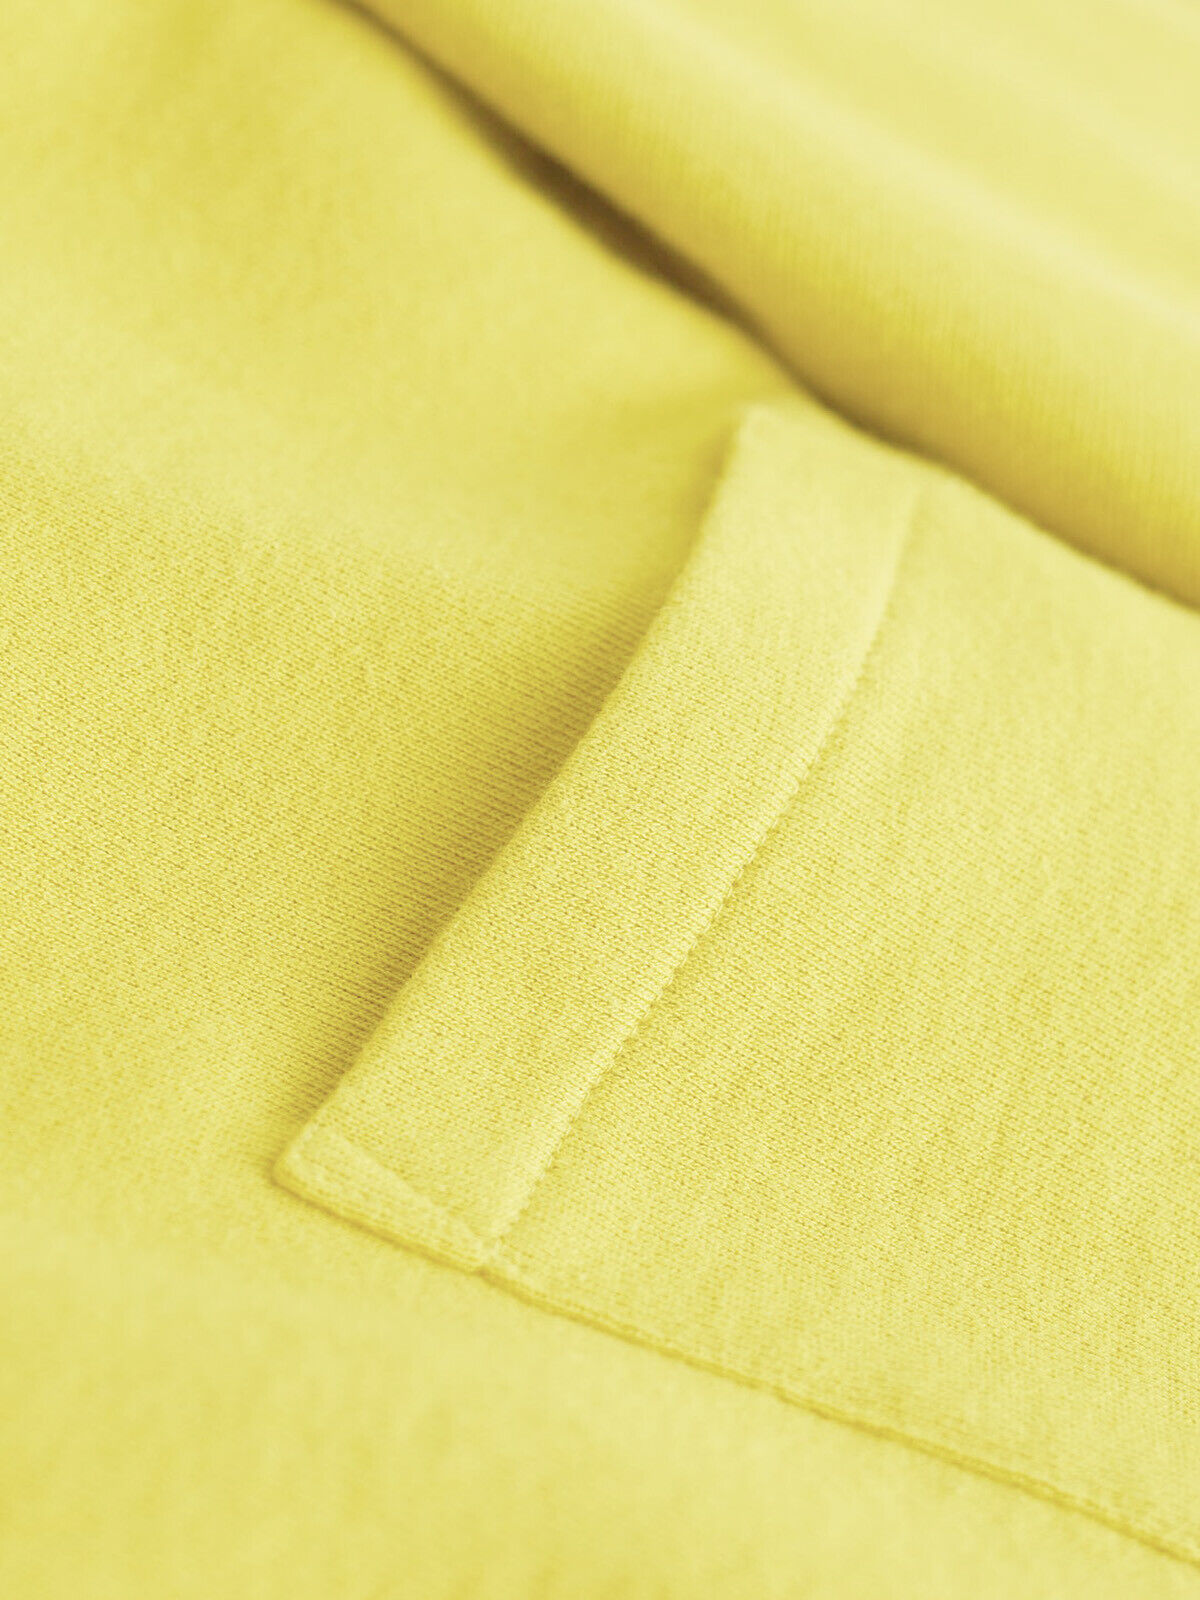 EX SEASALT Lemon Skylight Sweatshirt OVERSIZED SHORTER LENGTH Sizes 14 16 22 24